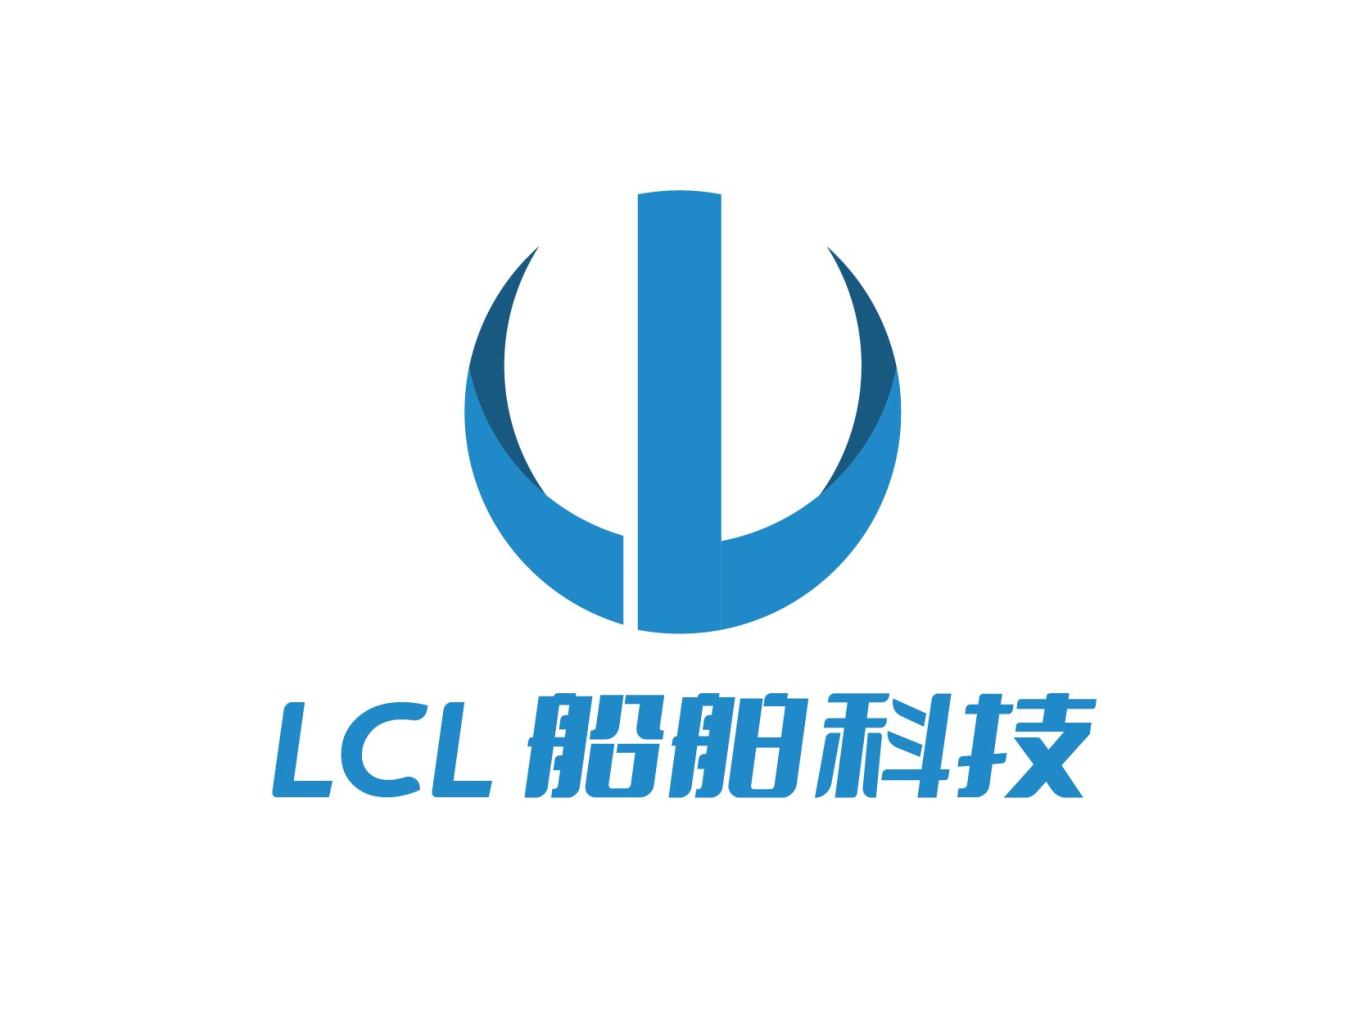  LCL 船舶科技图0